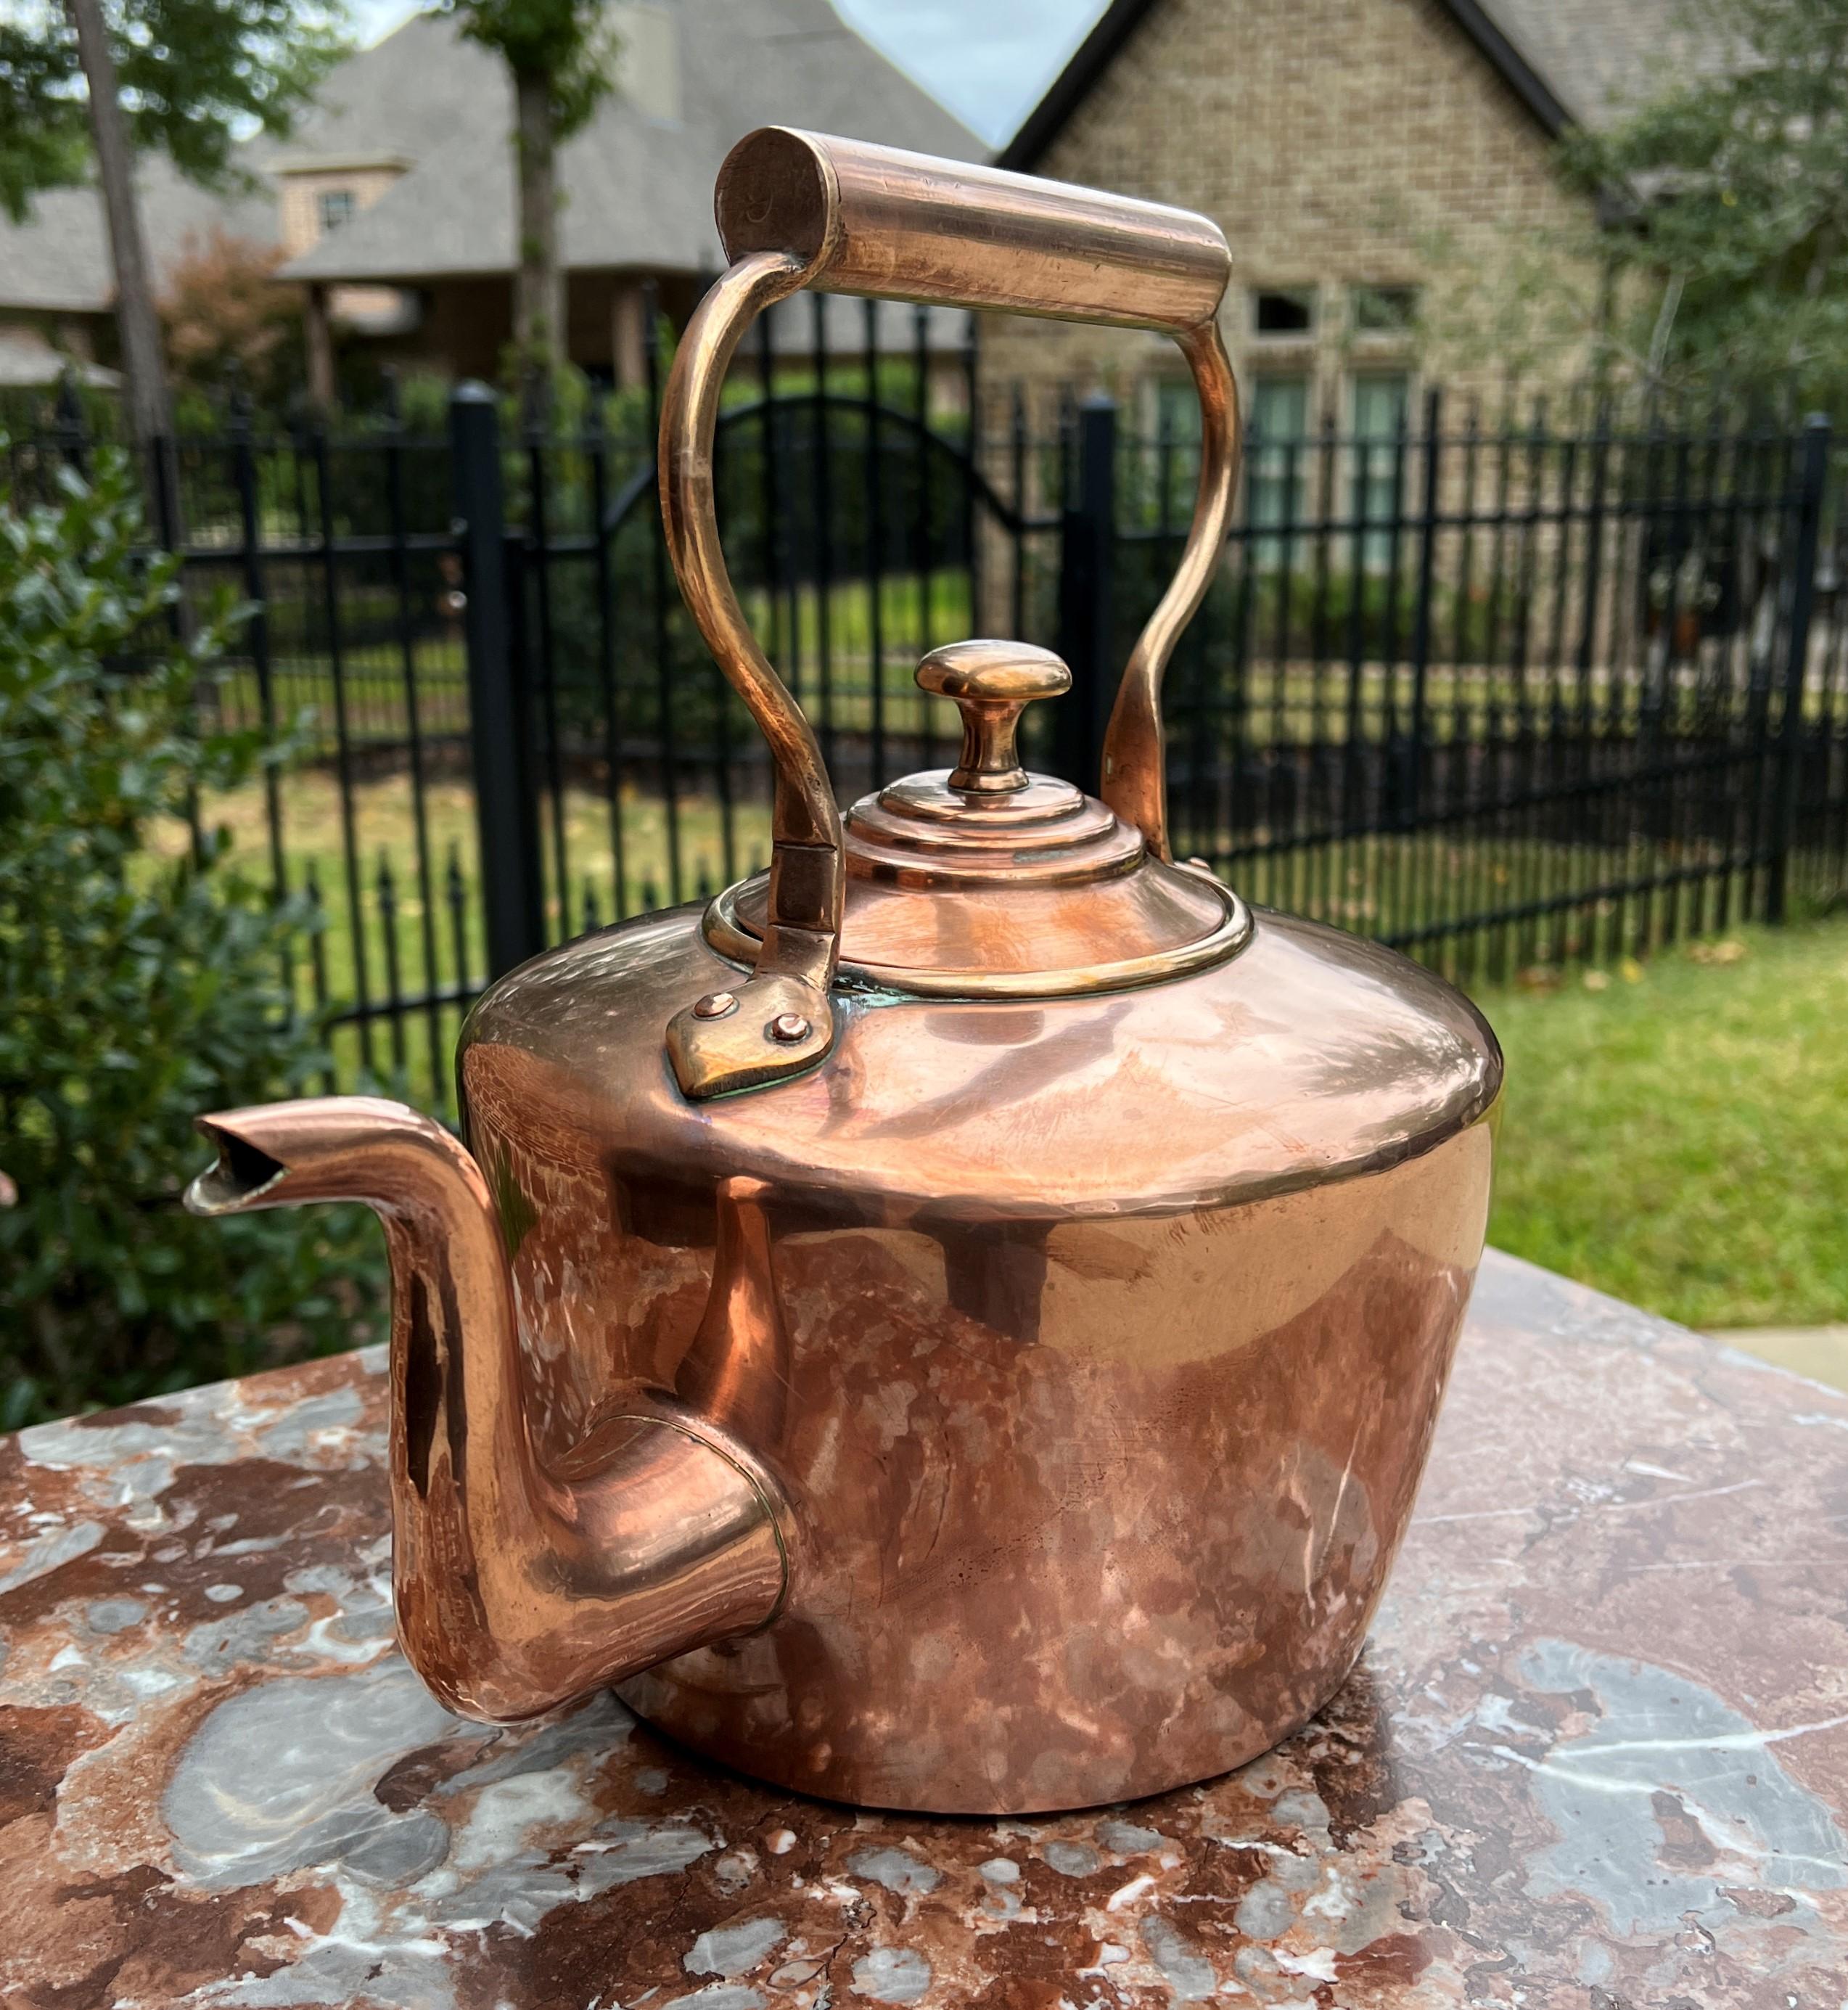 British Colonial Antique English Copper Brass Tea Kettle Coffee Pitcher Spout Handle #2 C. 1900